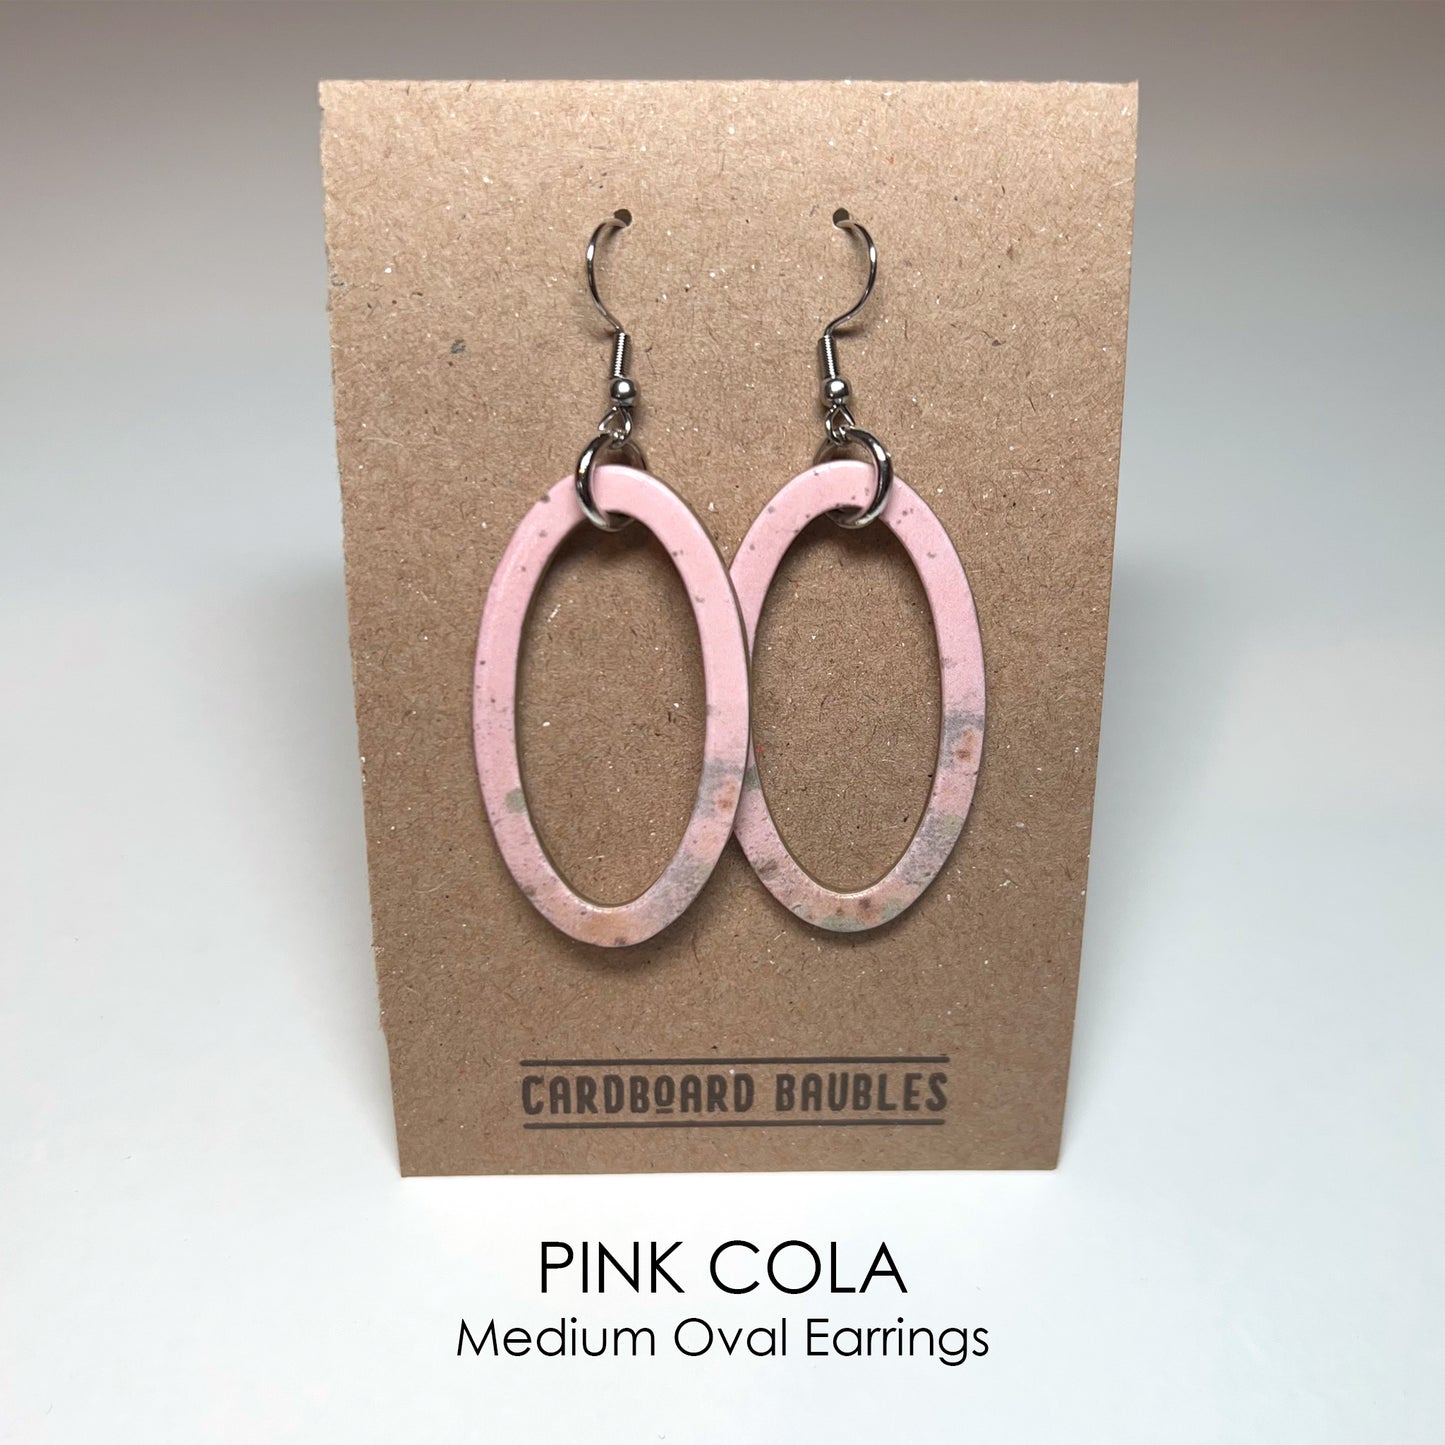 PINK COLA - Oval Cardboard Baubles Earrings